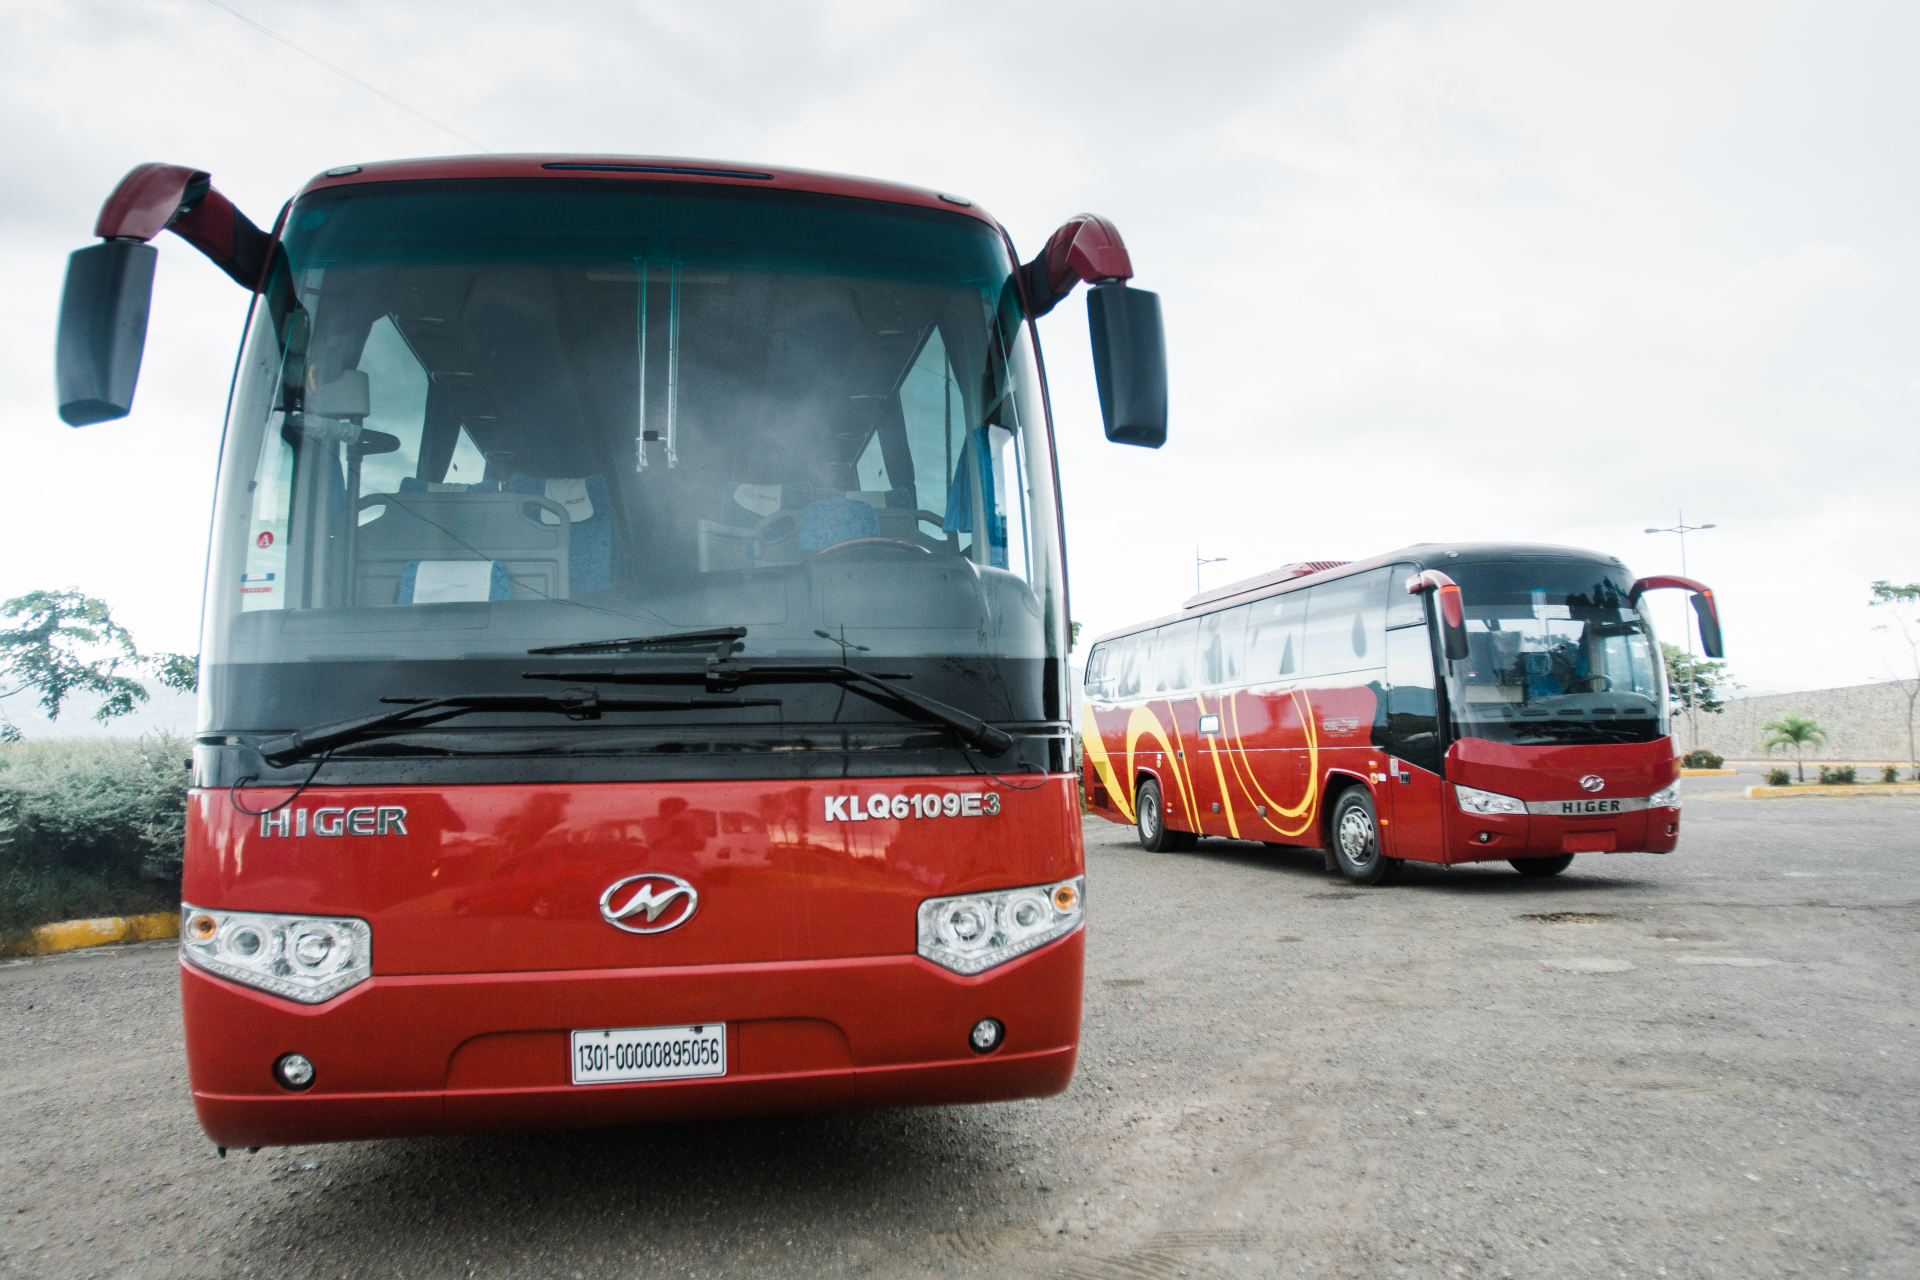 Higer Bus
Party Limo Bus /
Lapu-Lapu City, Cebu

 / Hourly (City Tour) ₱5,500.00
 / Airport Transfer ₱3,500.00
 / Daily ₱10,500.00
